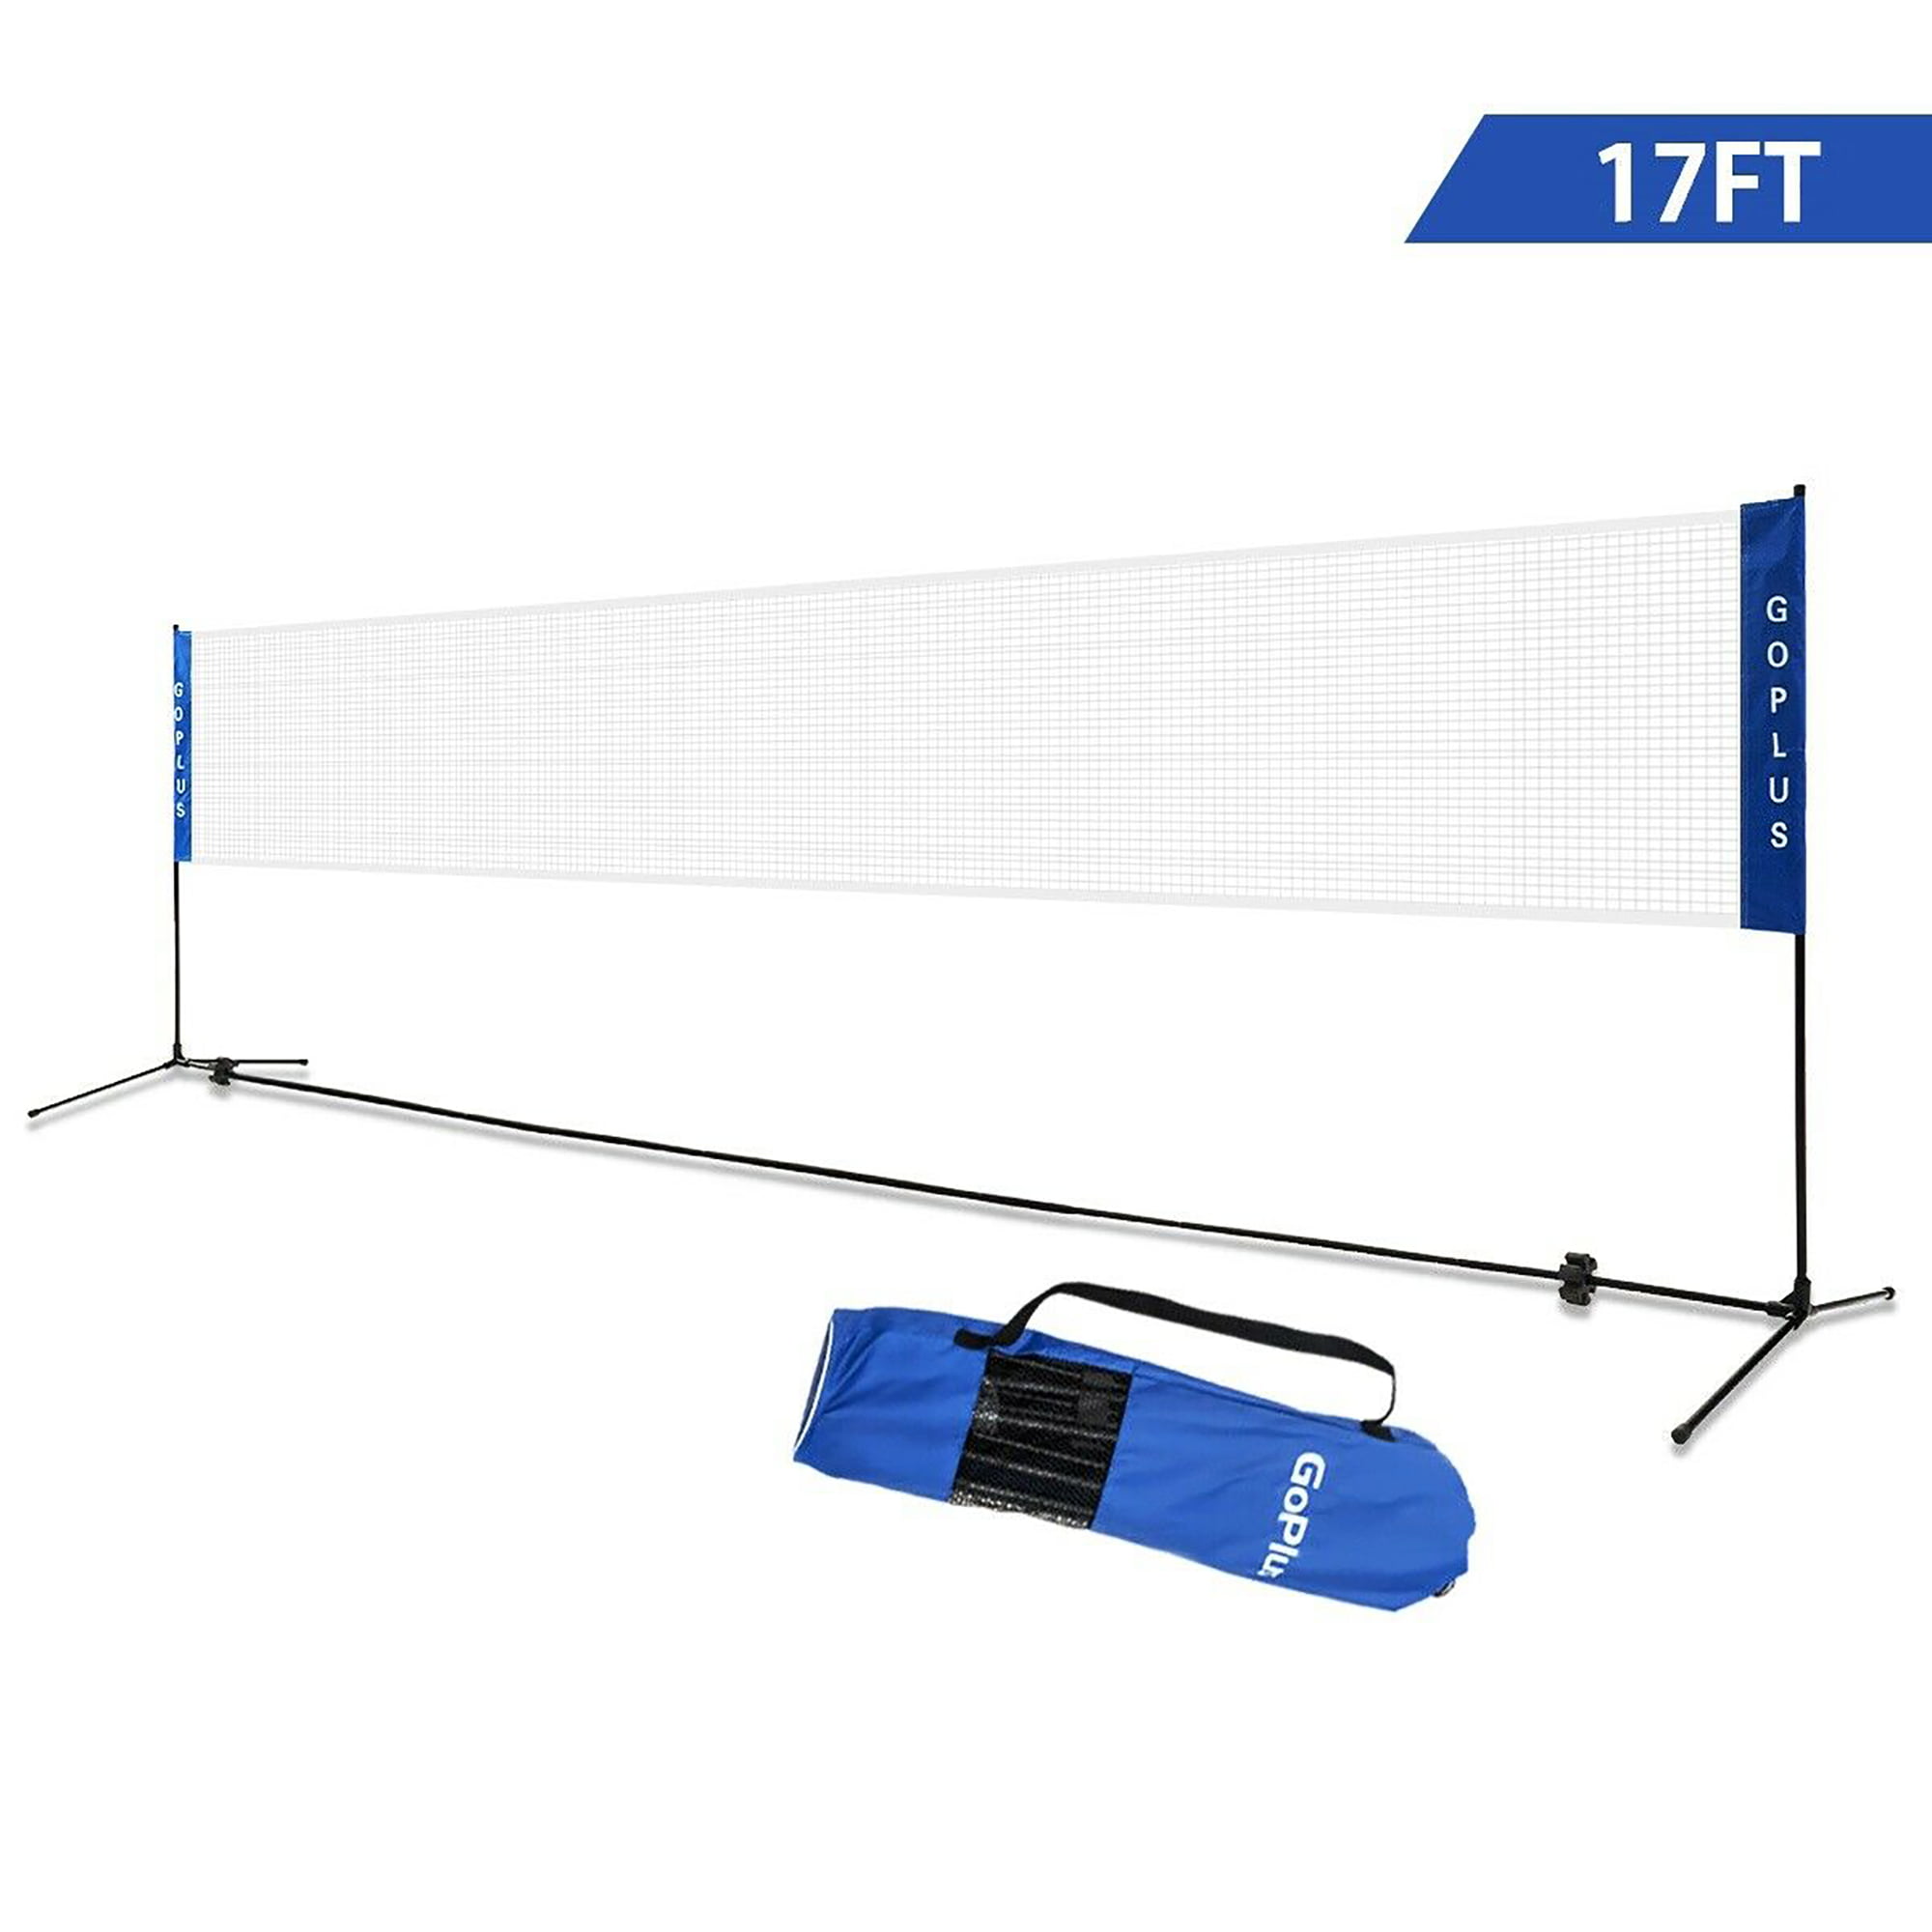 Portable Large Adjustable Foldable Badminton Mobile Net Tennis Volleyball UK 